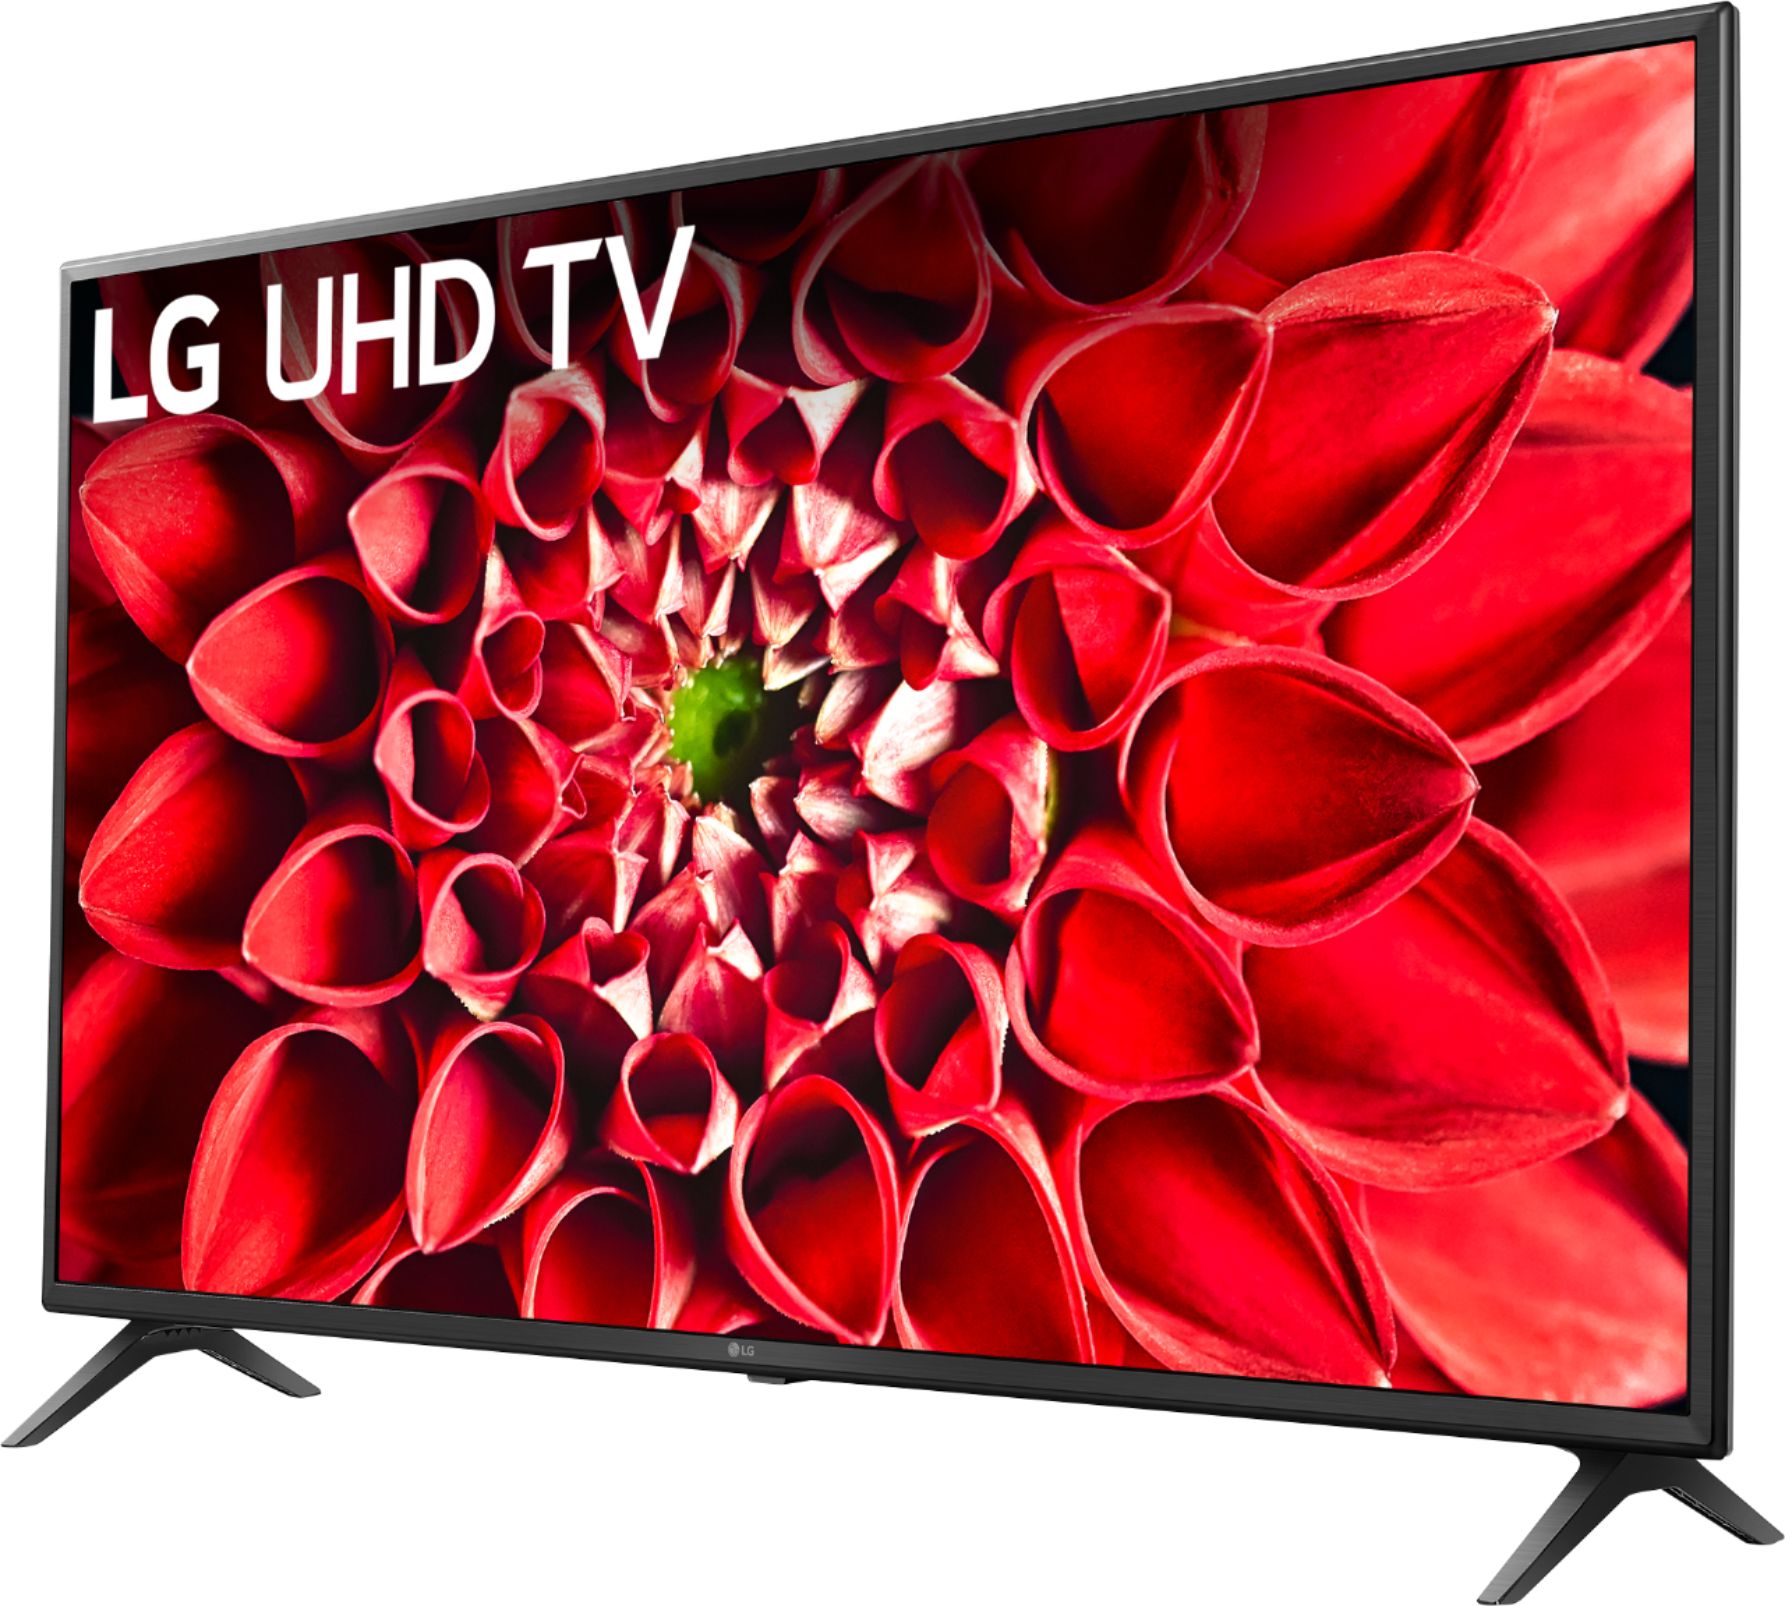 medlem toksicitet overvåge Best Buy: LG 55" Class UN7000 Series LED 4K UHD Smart webOS TV 55UN7000PUB